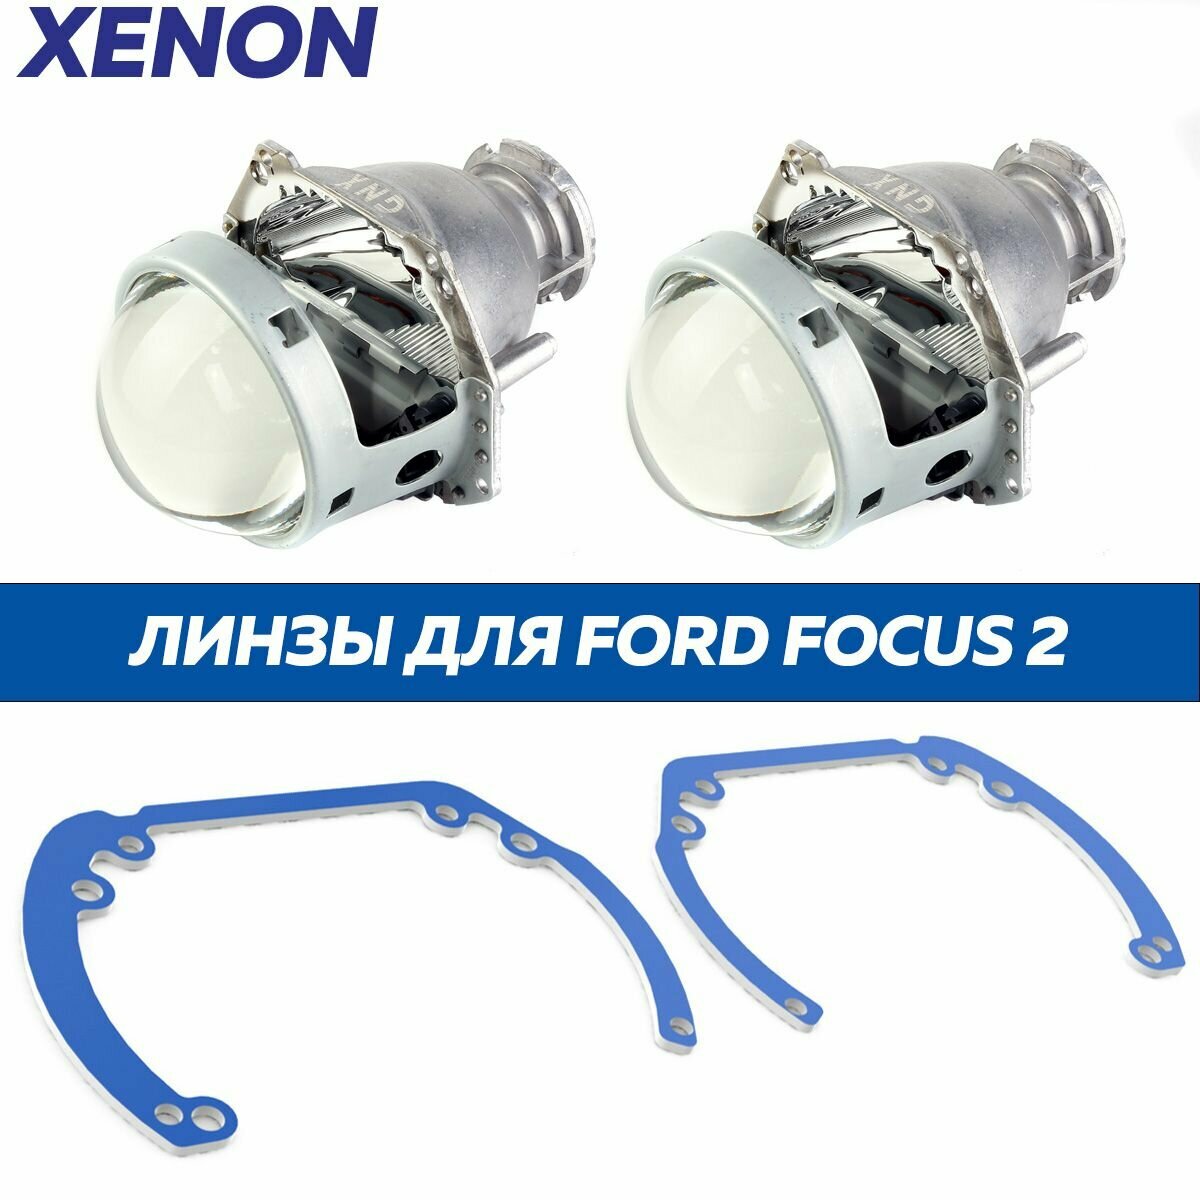 Линзы ксенон для фар Ford Focus 2 2007-2011 (CLEAR), GNX, для автомобилей Форд Фокус 2